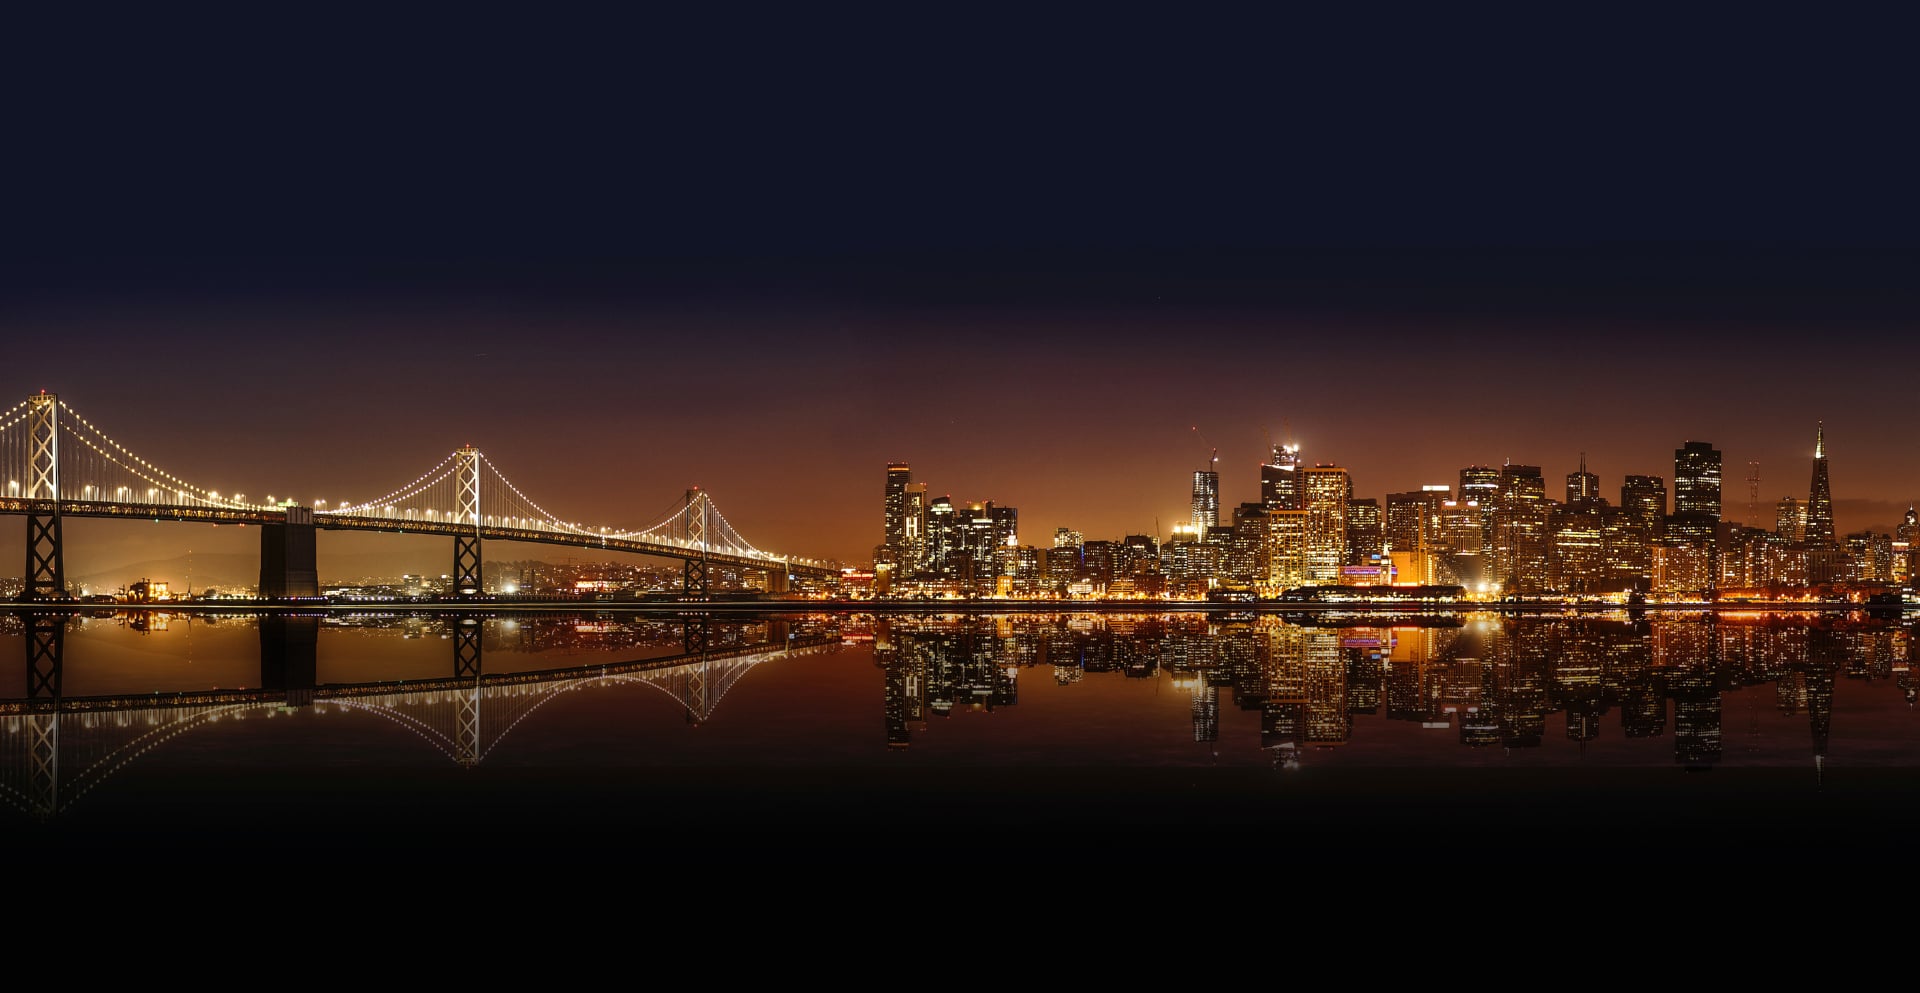 San Francisco-Oakland Bay Bridge at 1280 x 960 size wallpapers HD quality